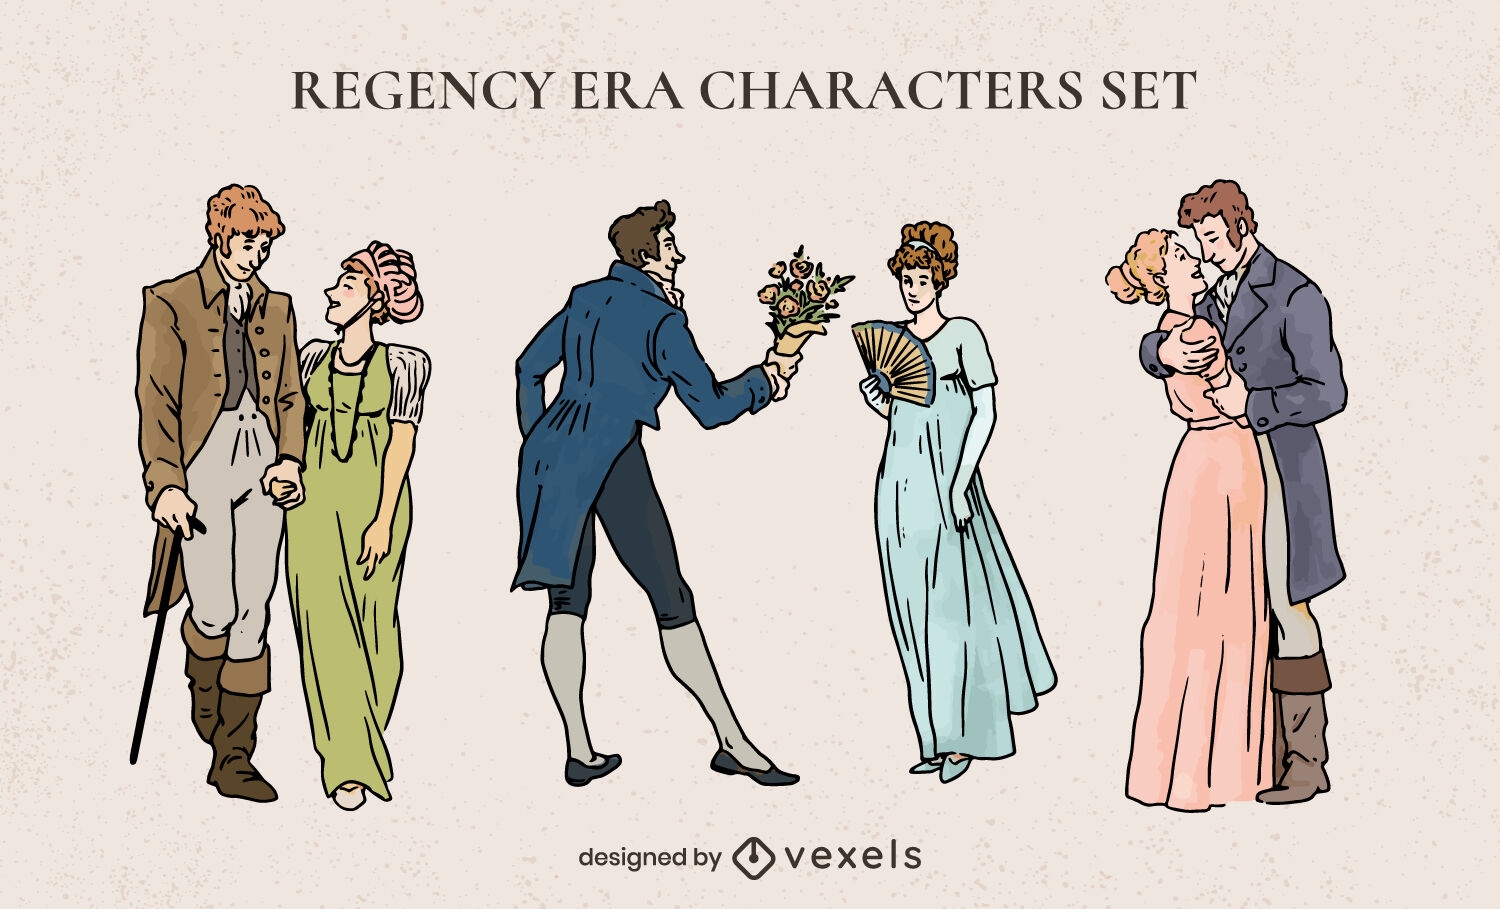 Regency era characters illustration set